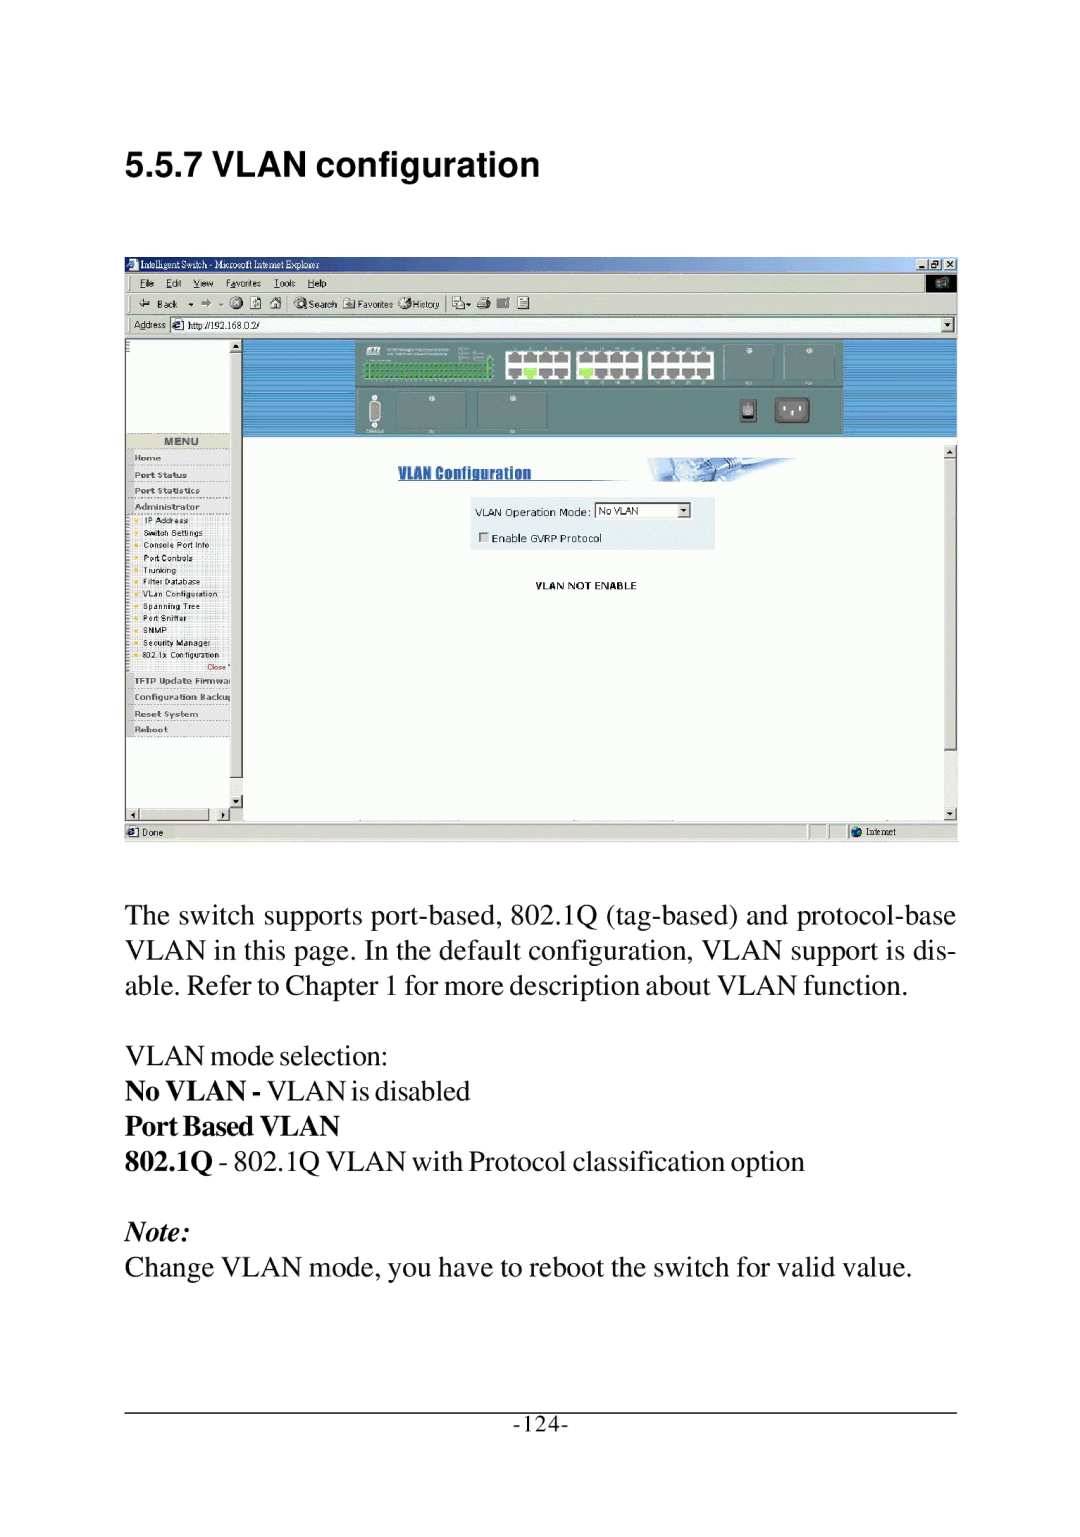 KTI Networks KS-2260 operation manual Vlan configuration, Port Based Vlan 